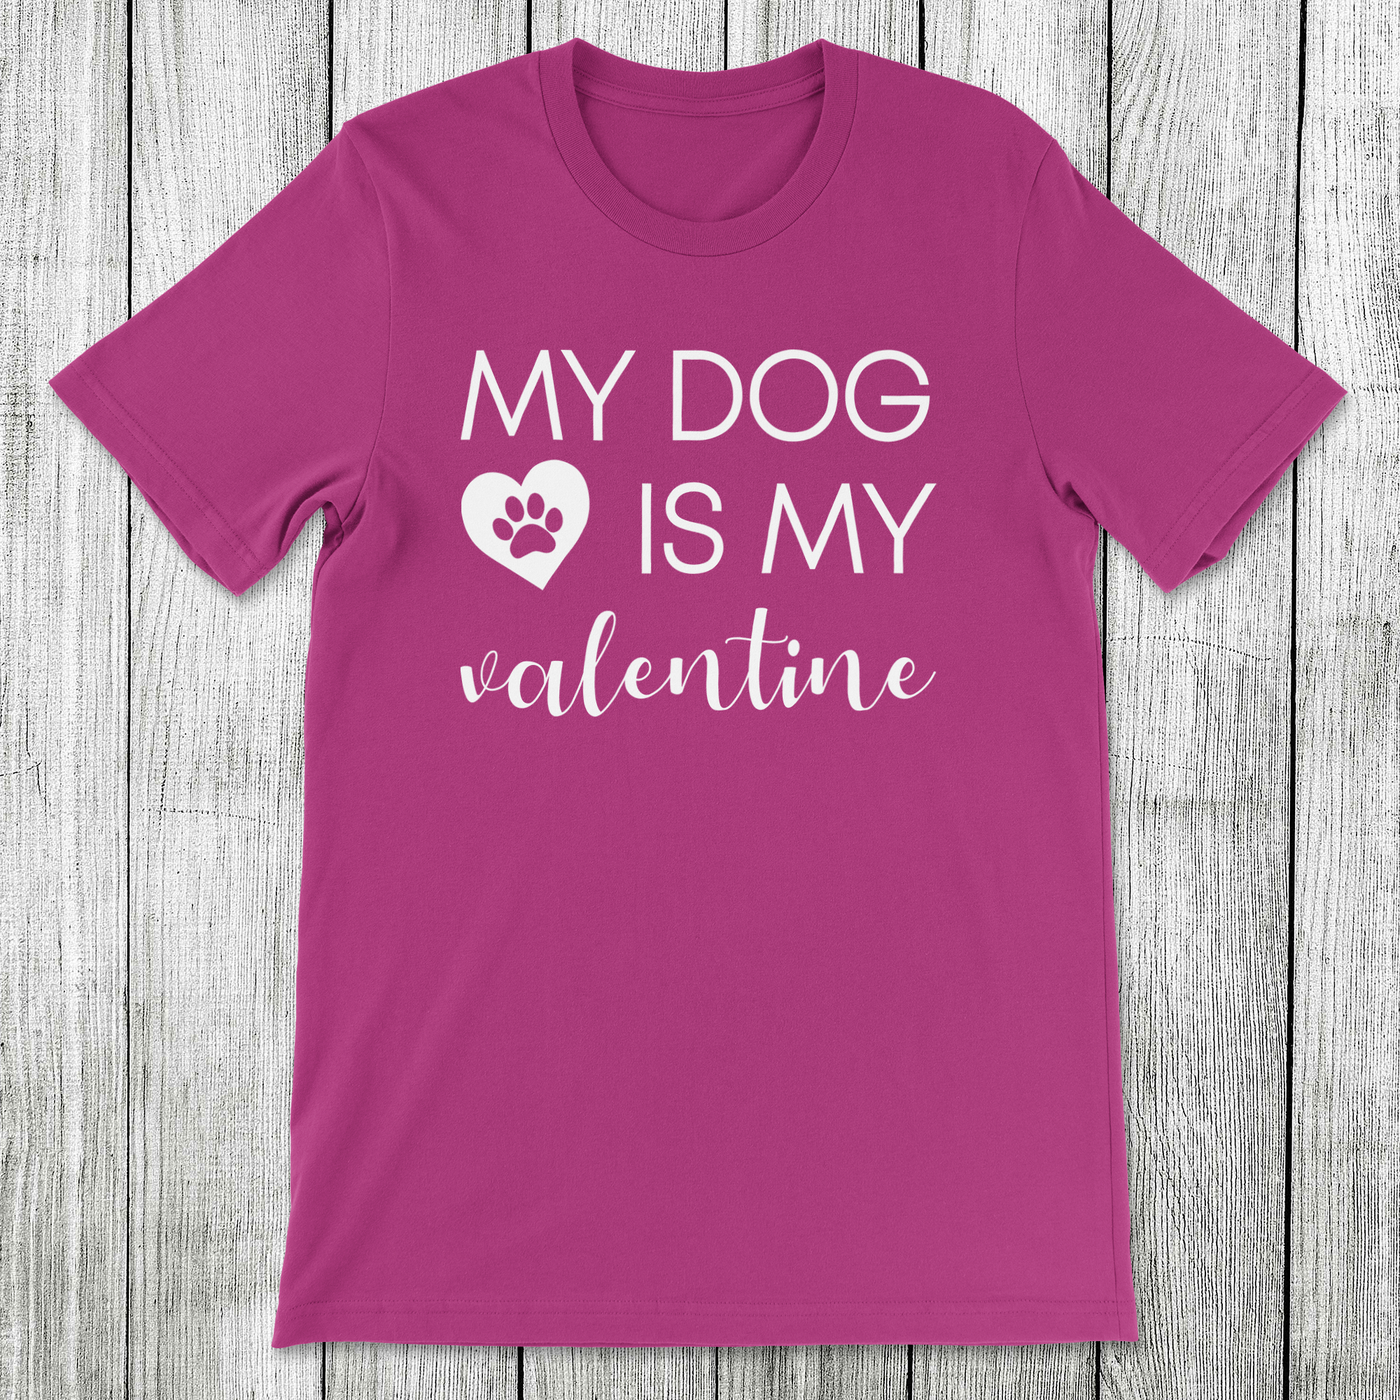 Daydream Tees Dog Valentine